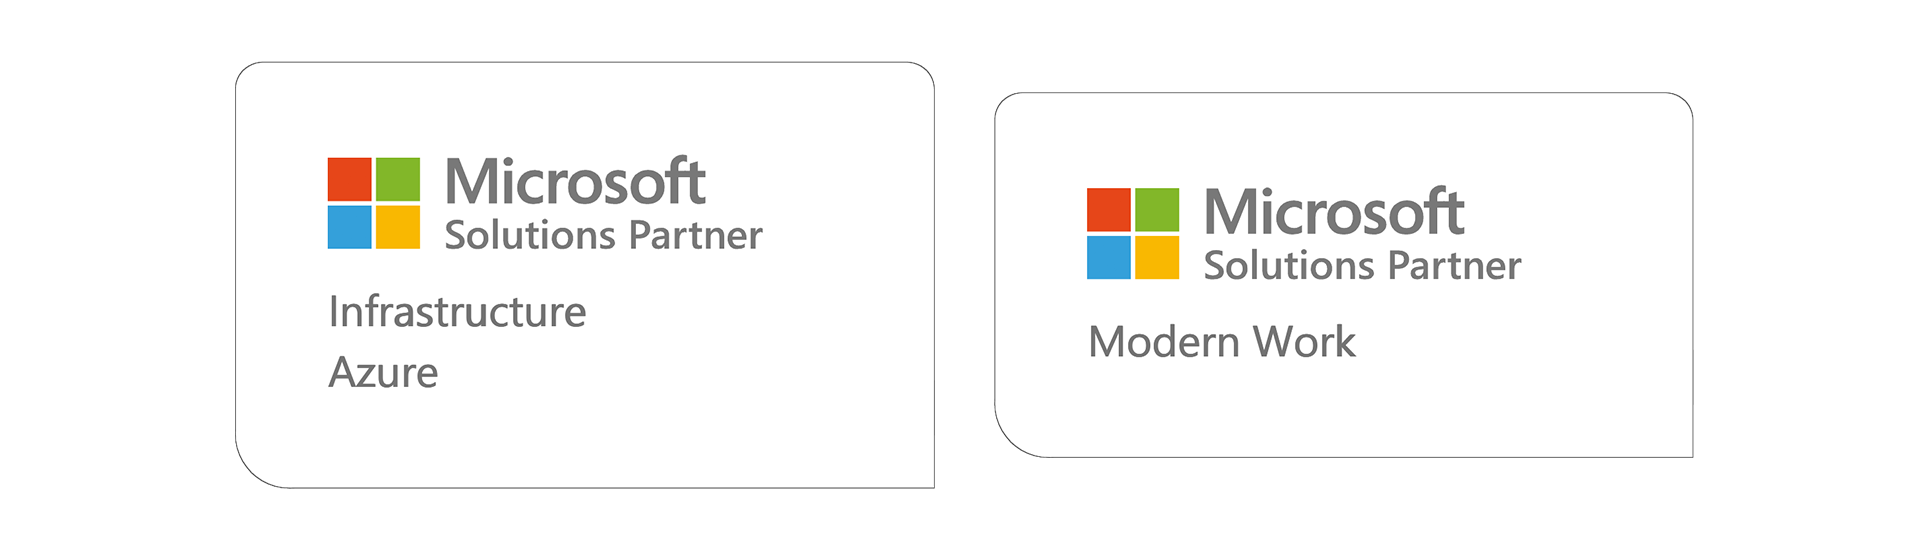 Microsoft Solution Partner Azure Infrastructure